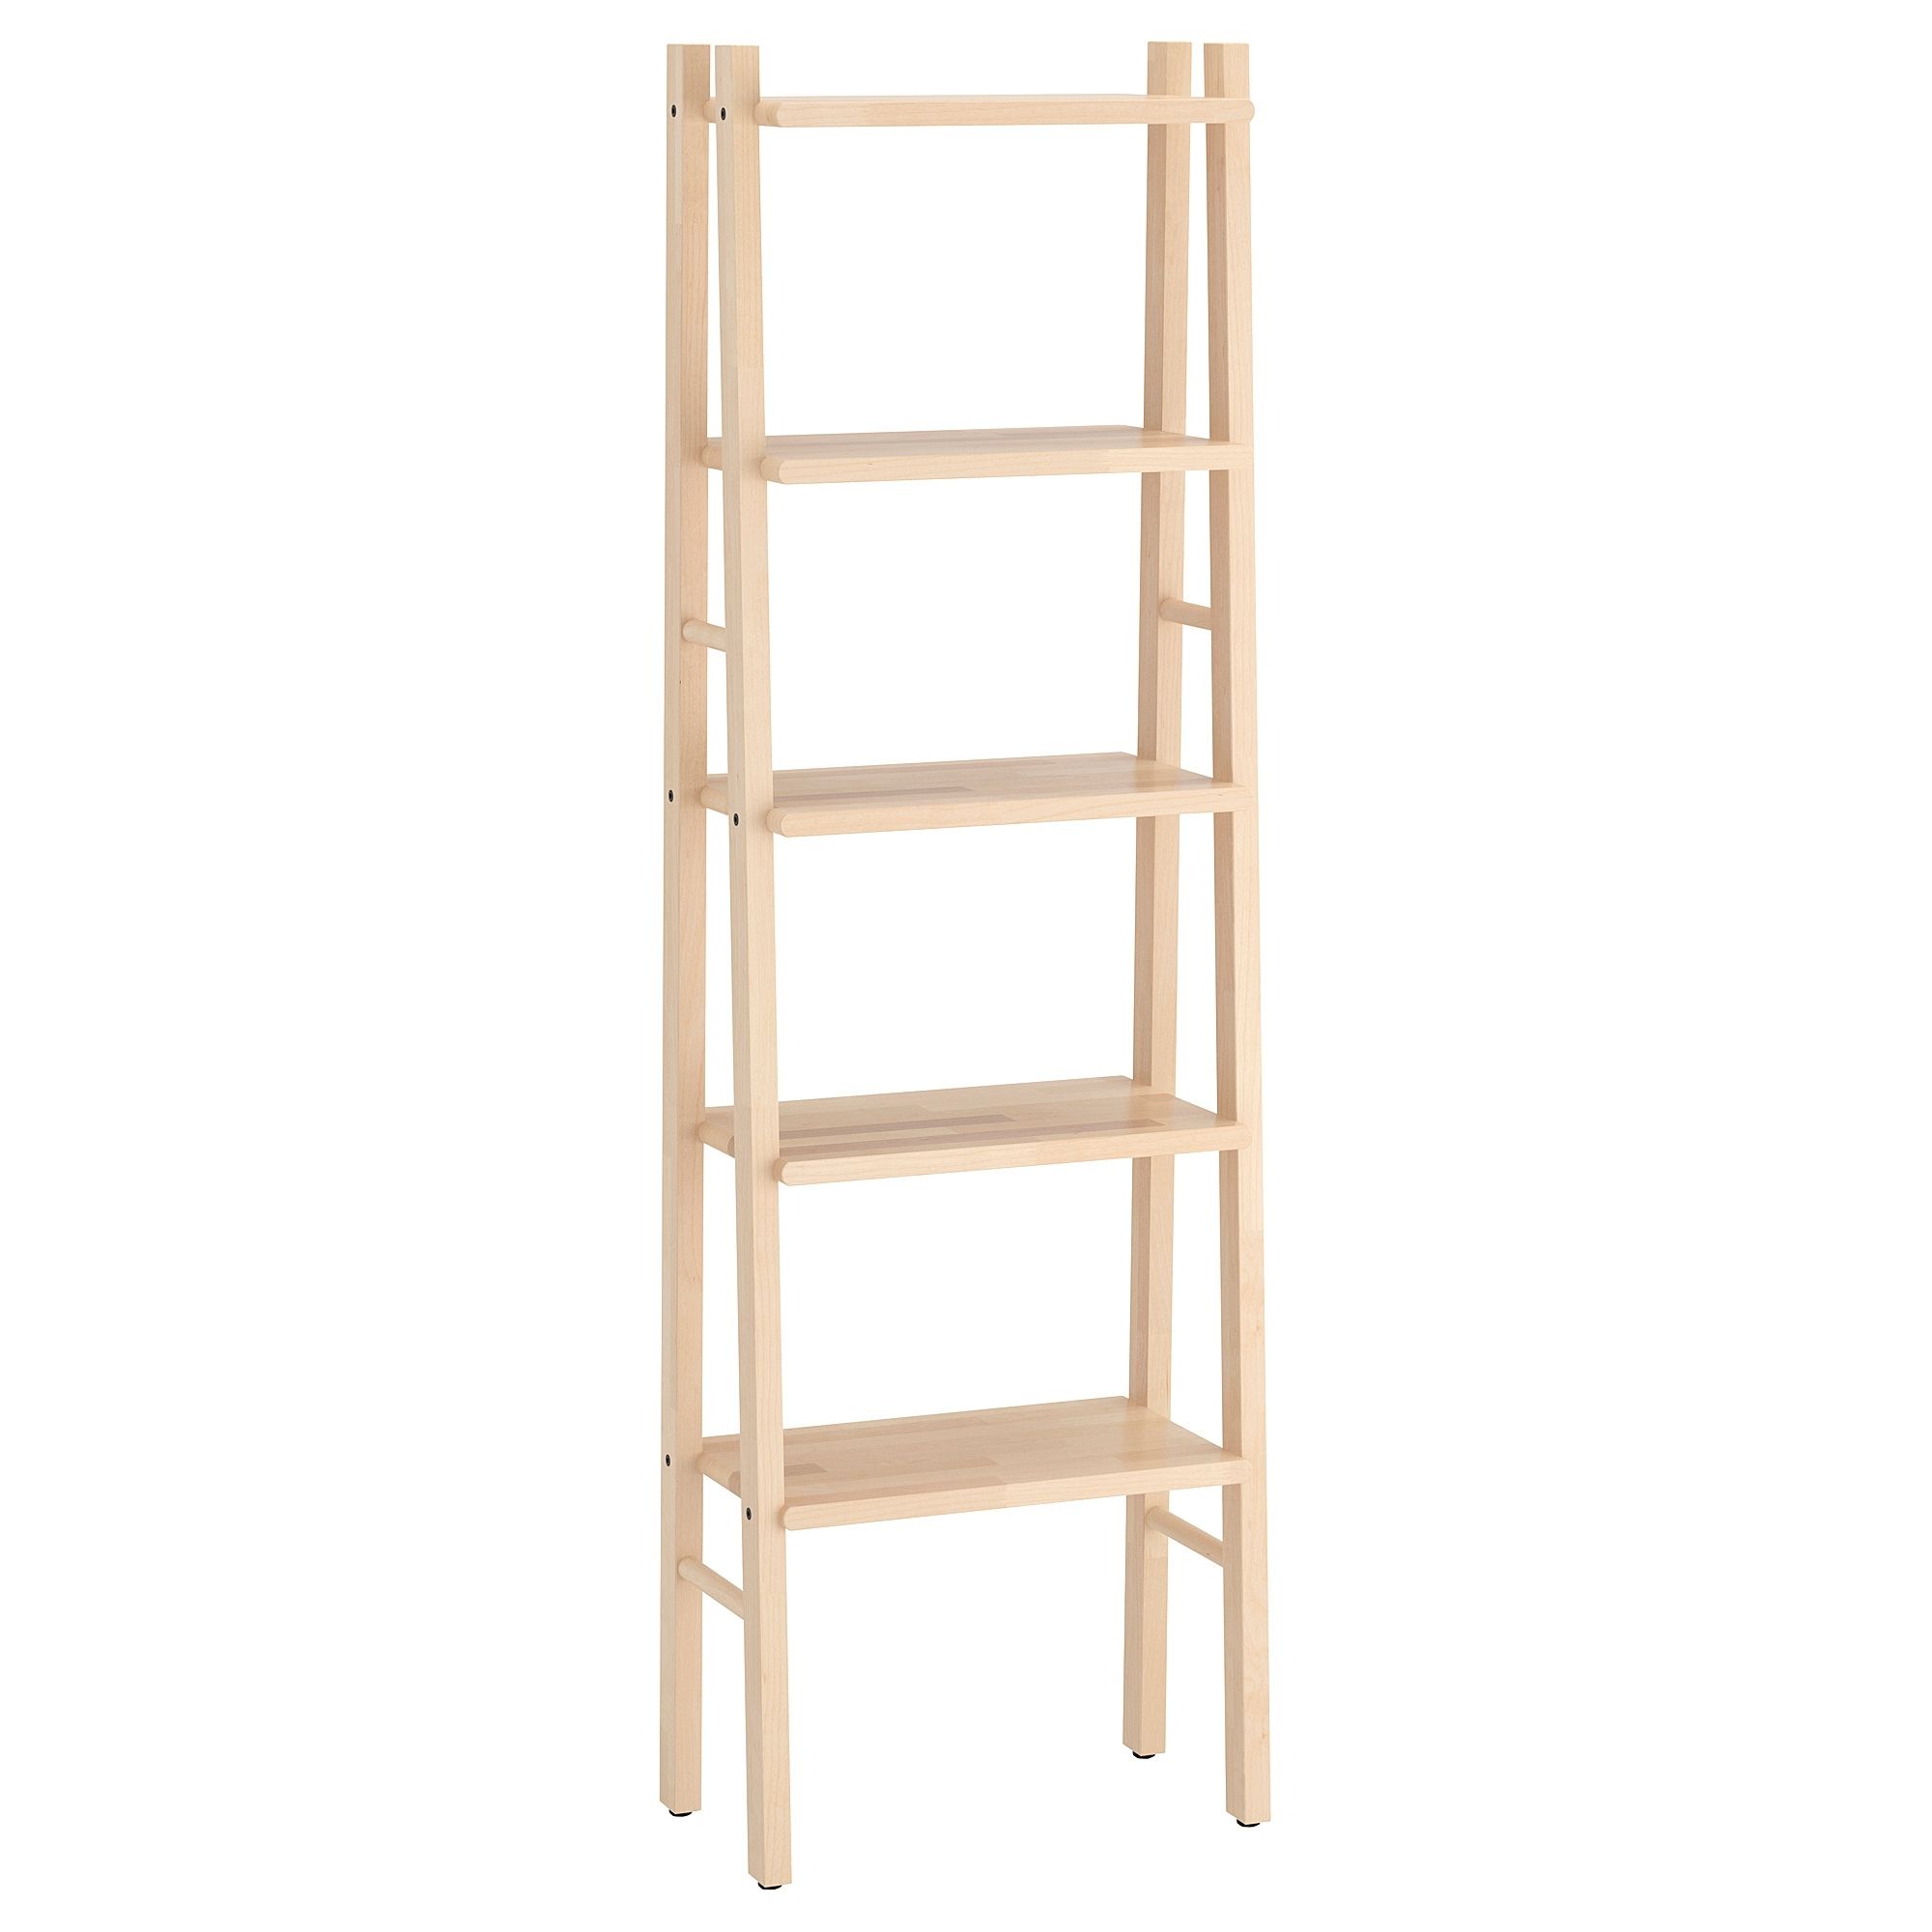 Small Ladder Shelf Ikea : Wall shelves turn empty walls into a great ...